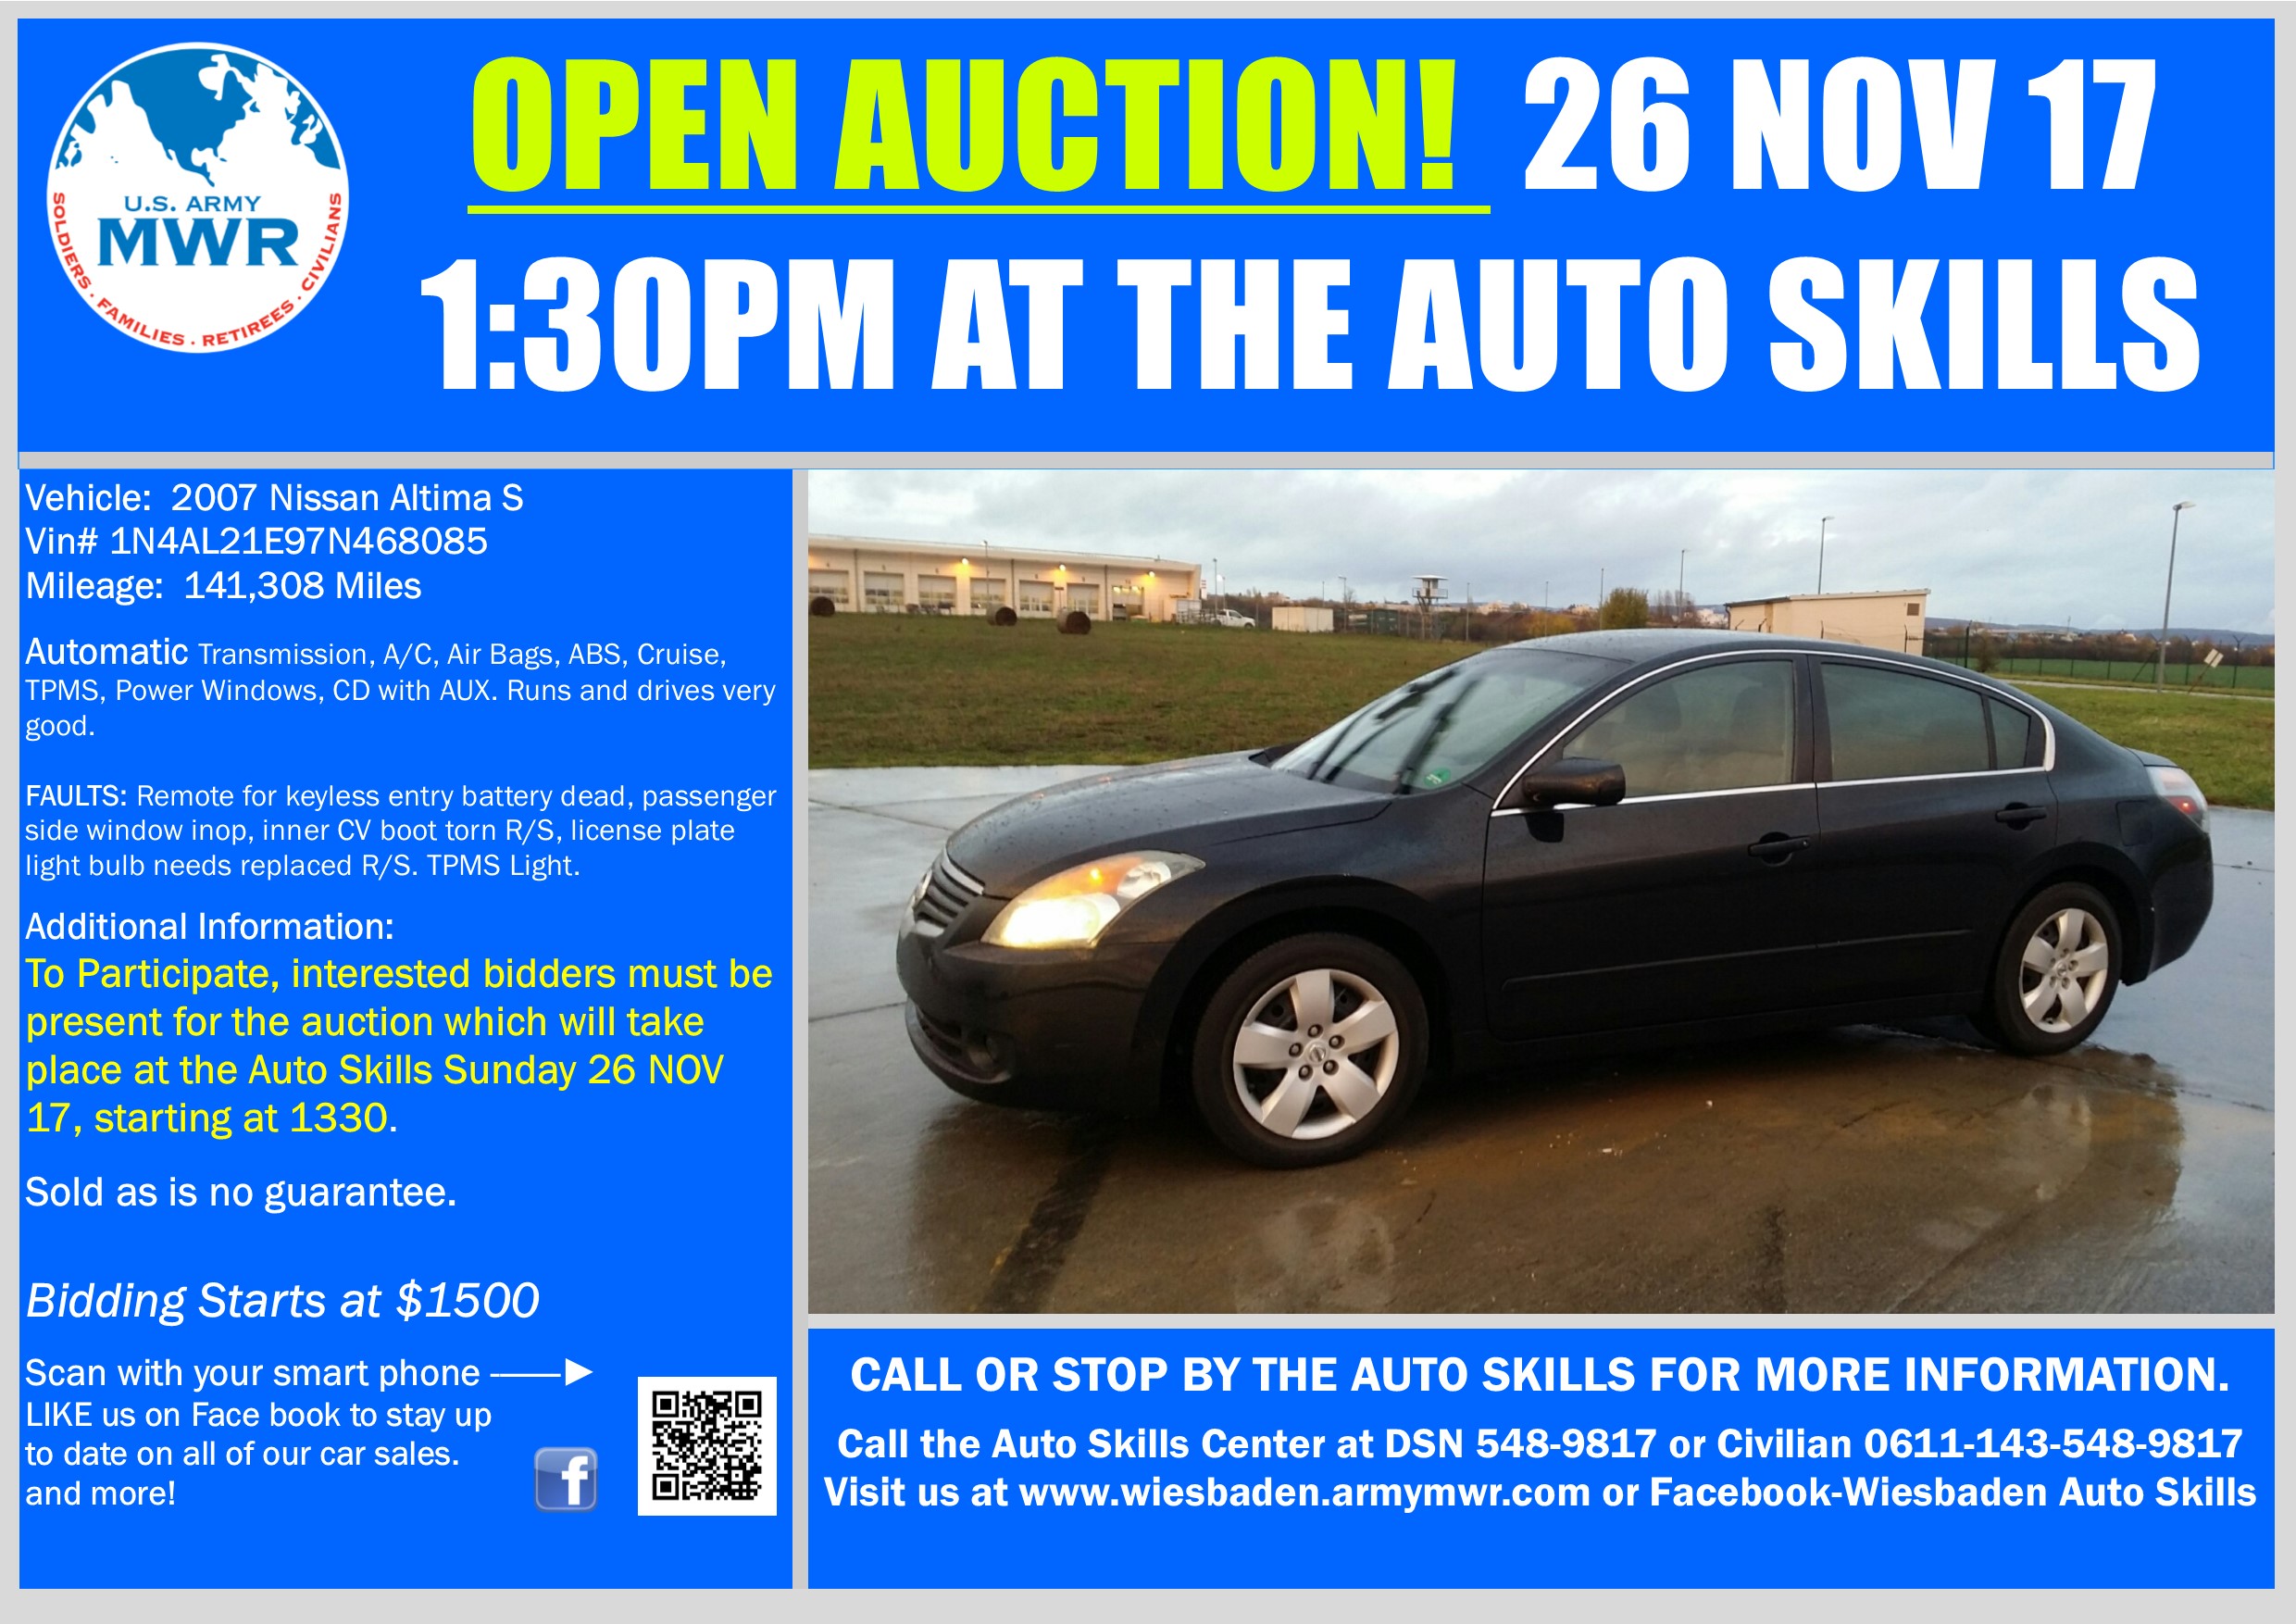 Sale_Nissan Altima 26 Nov 17 Open Auction.jpg